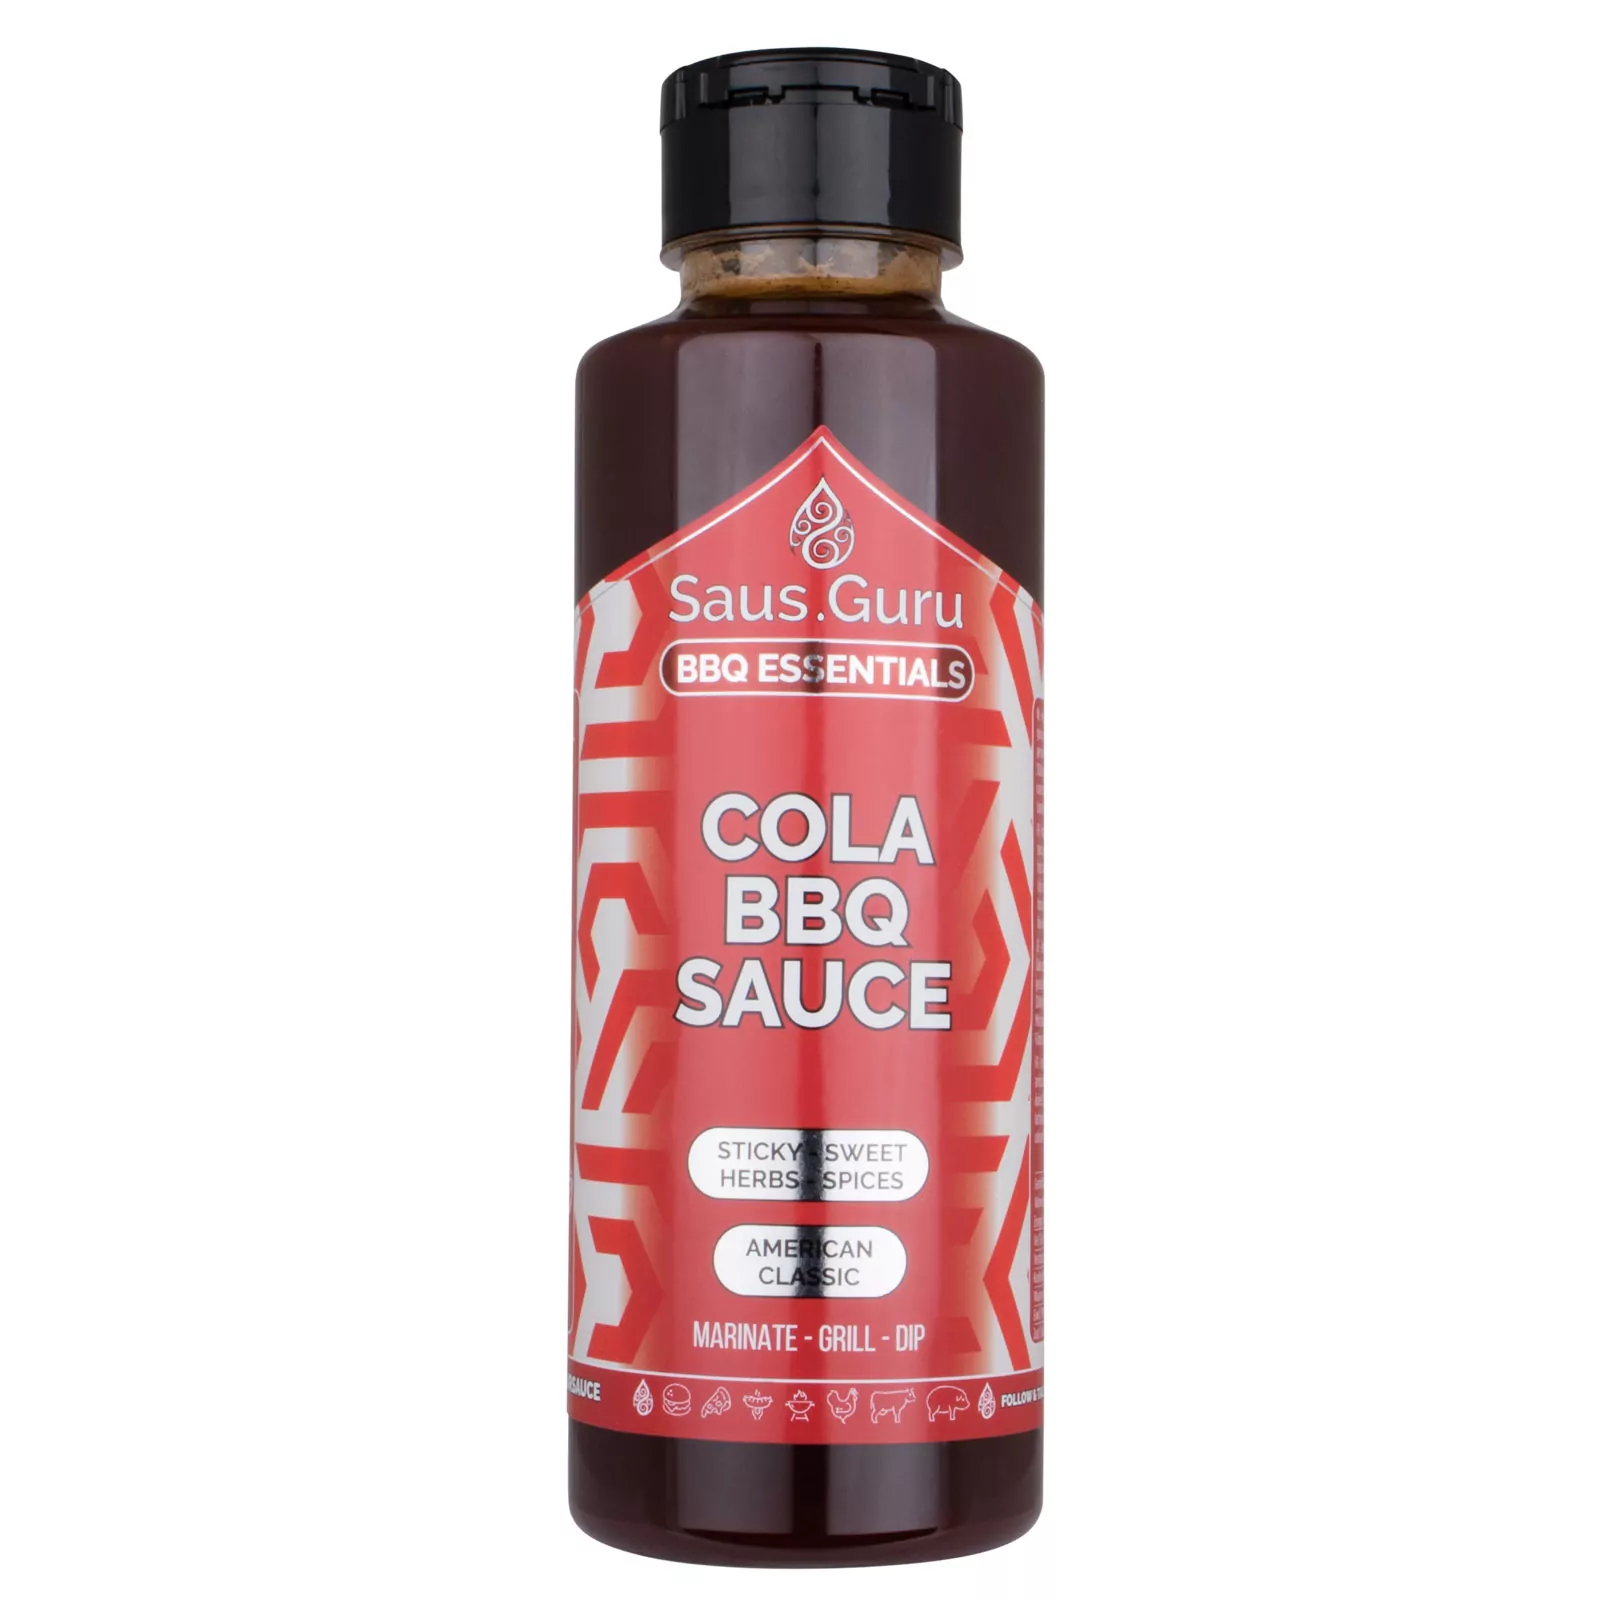 Saus.Guru Classic Cola - Bbq Sauce 0,5L